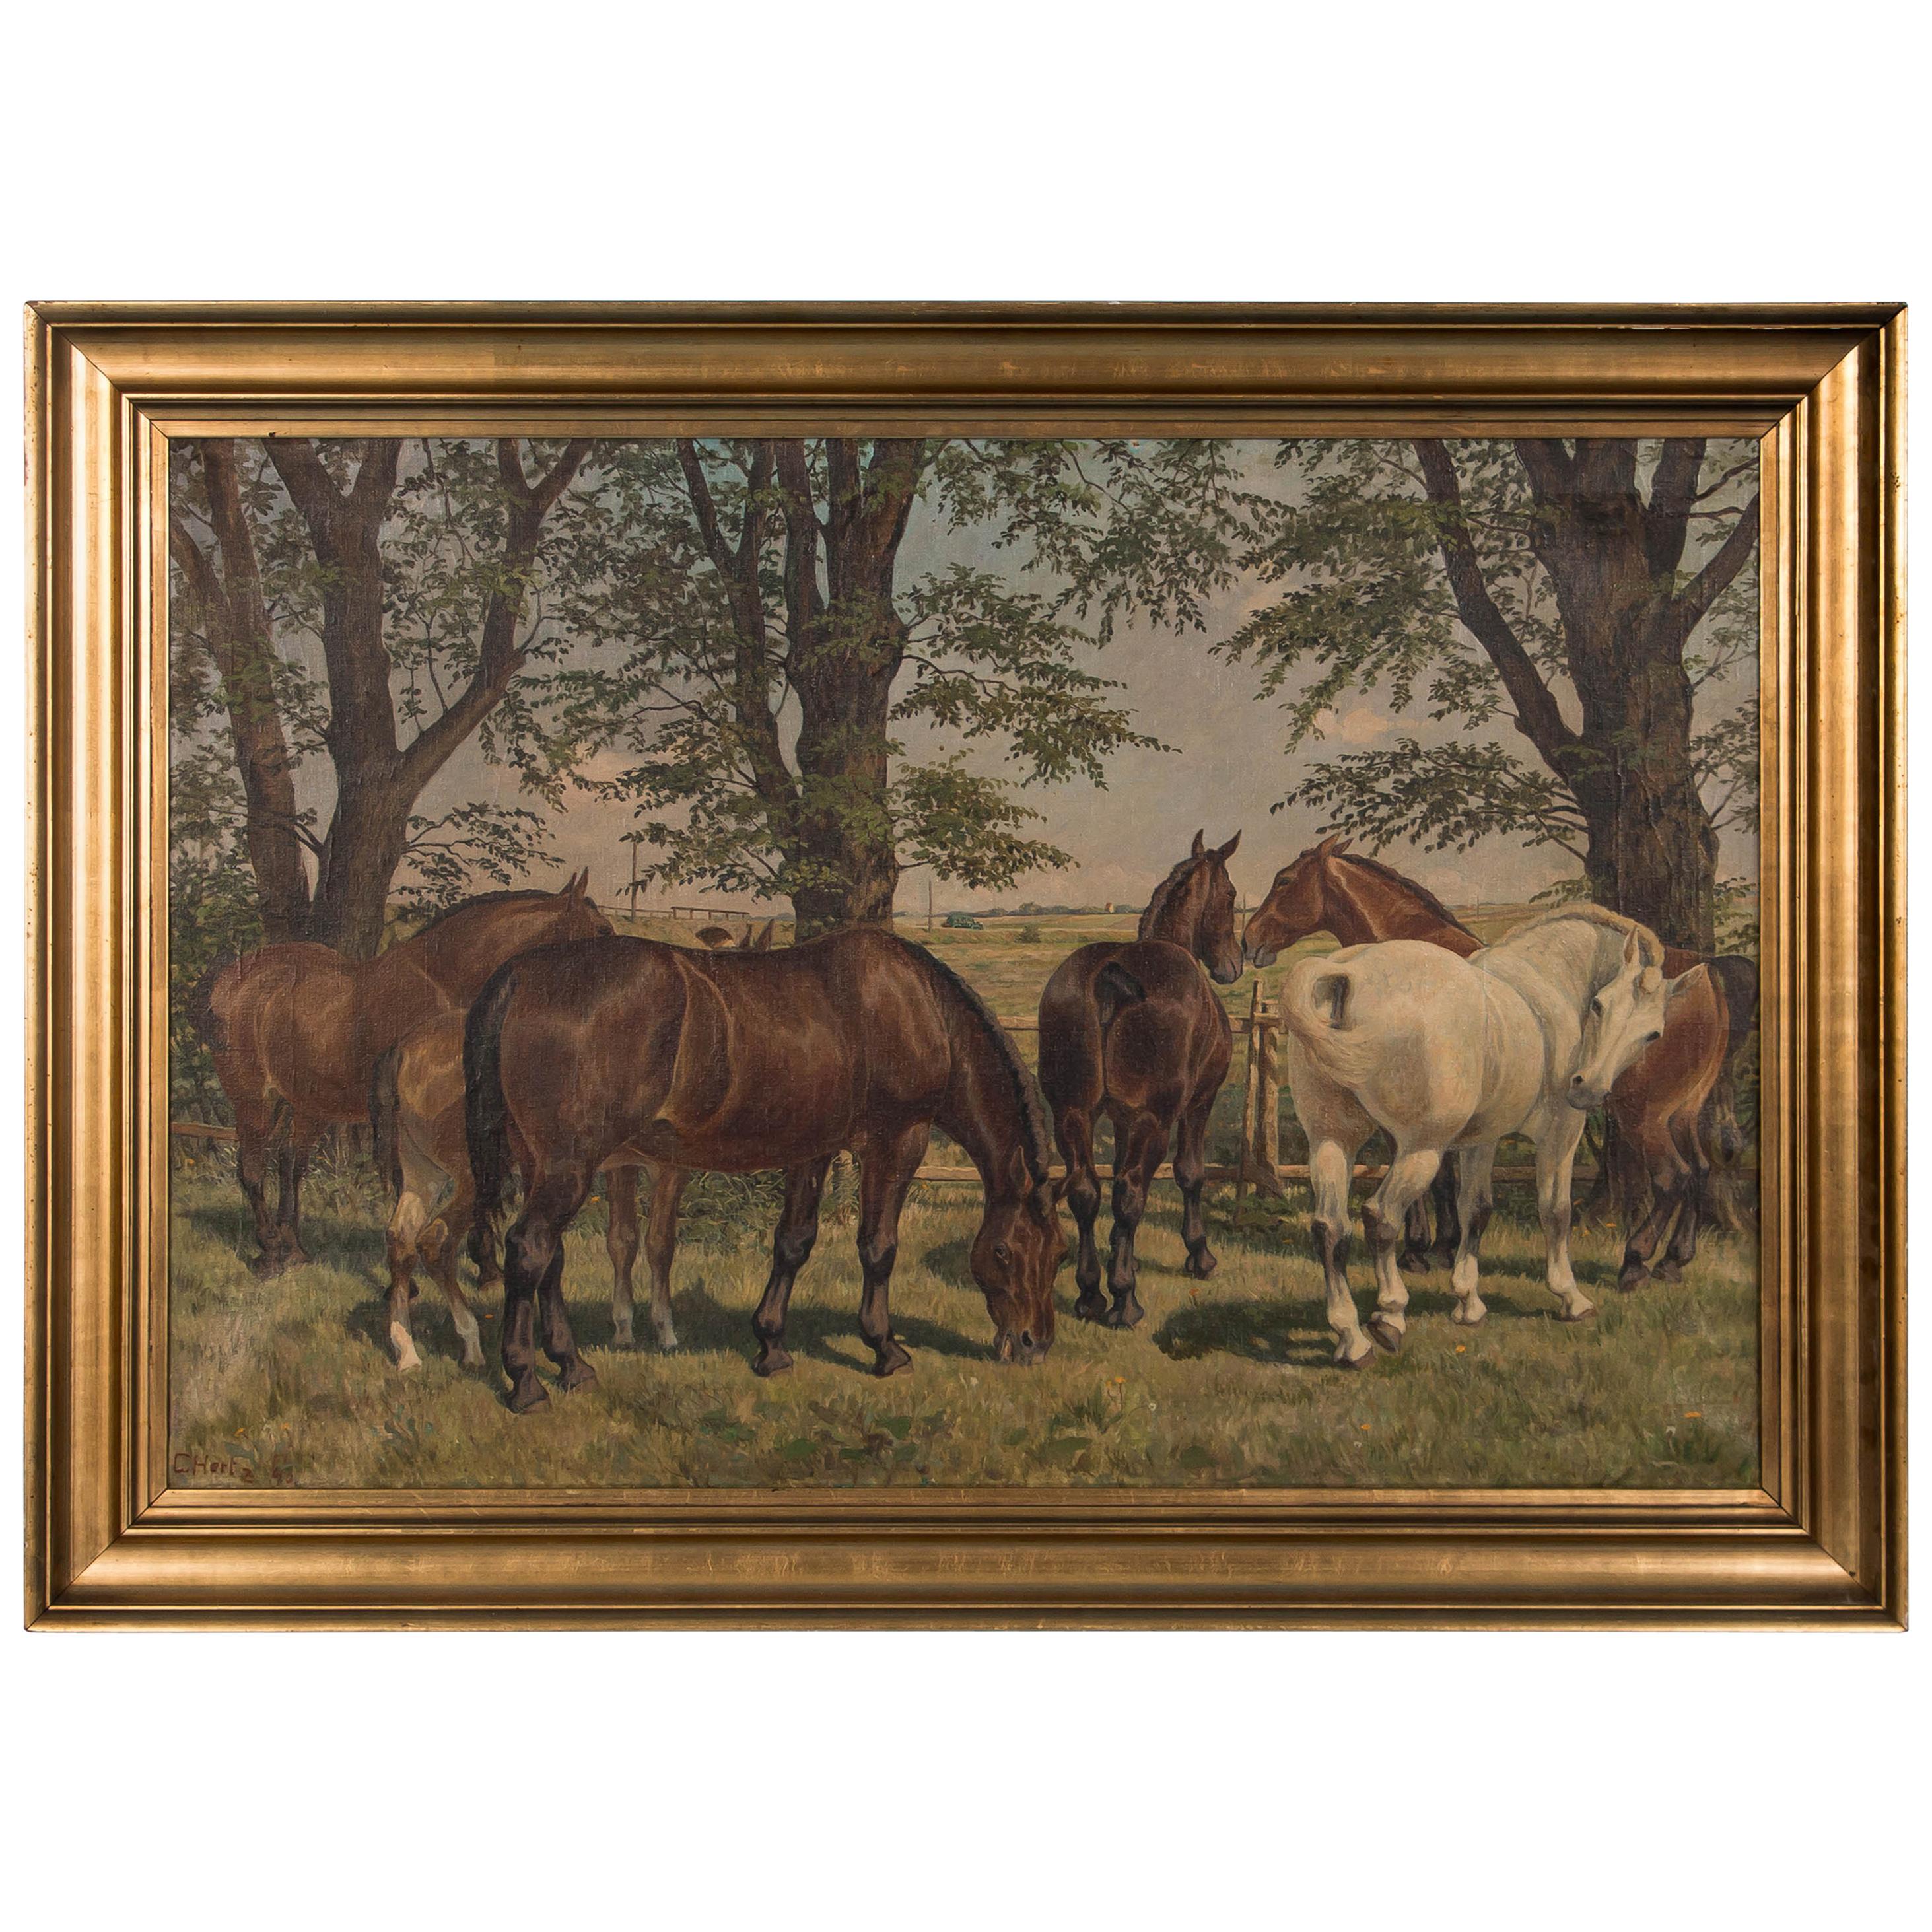 Antique Original Oil Painting of Horses Grazing, Signed Carl Hertz